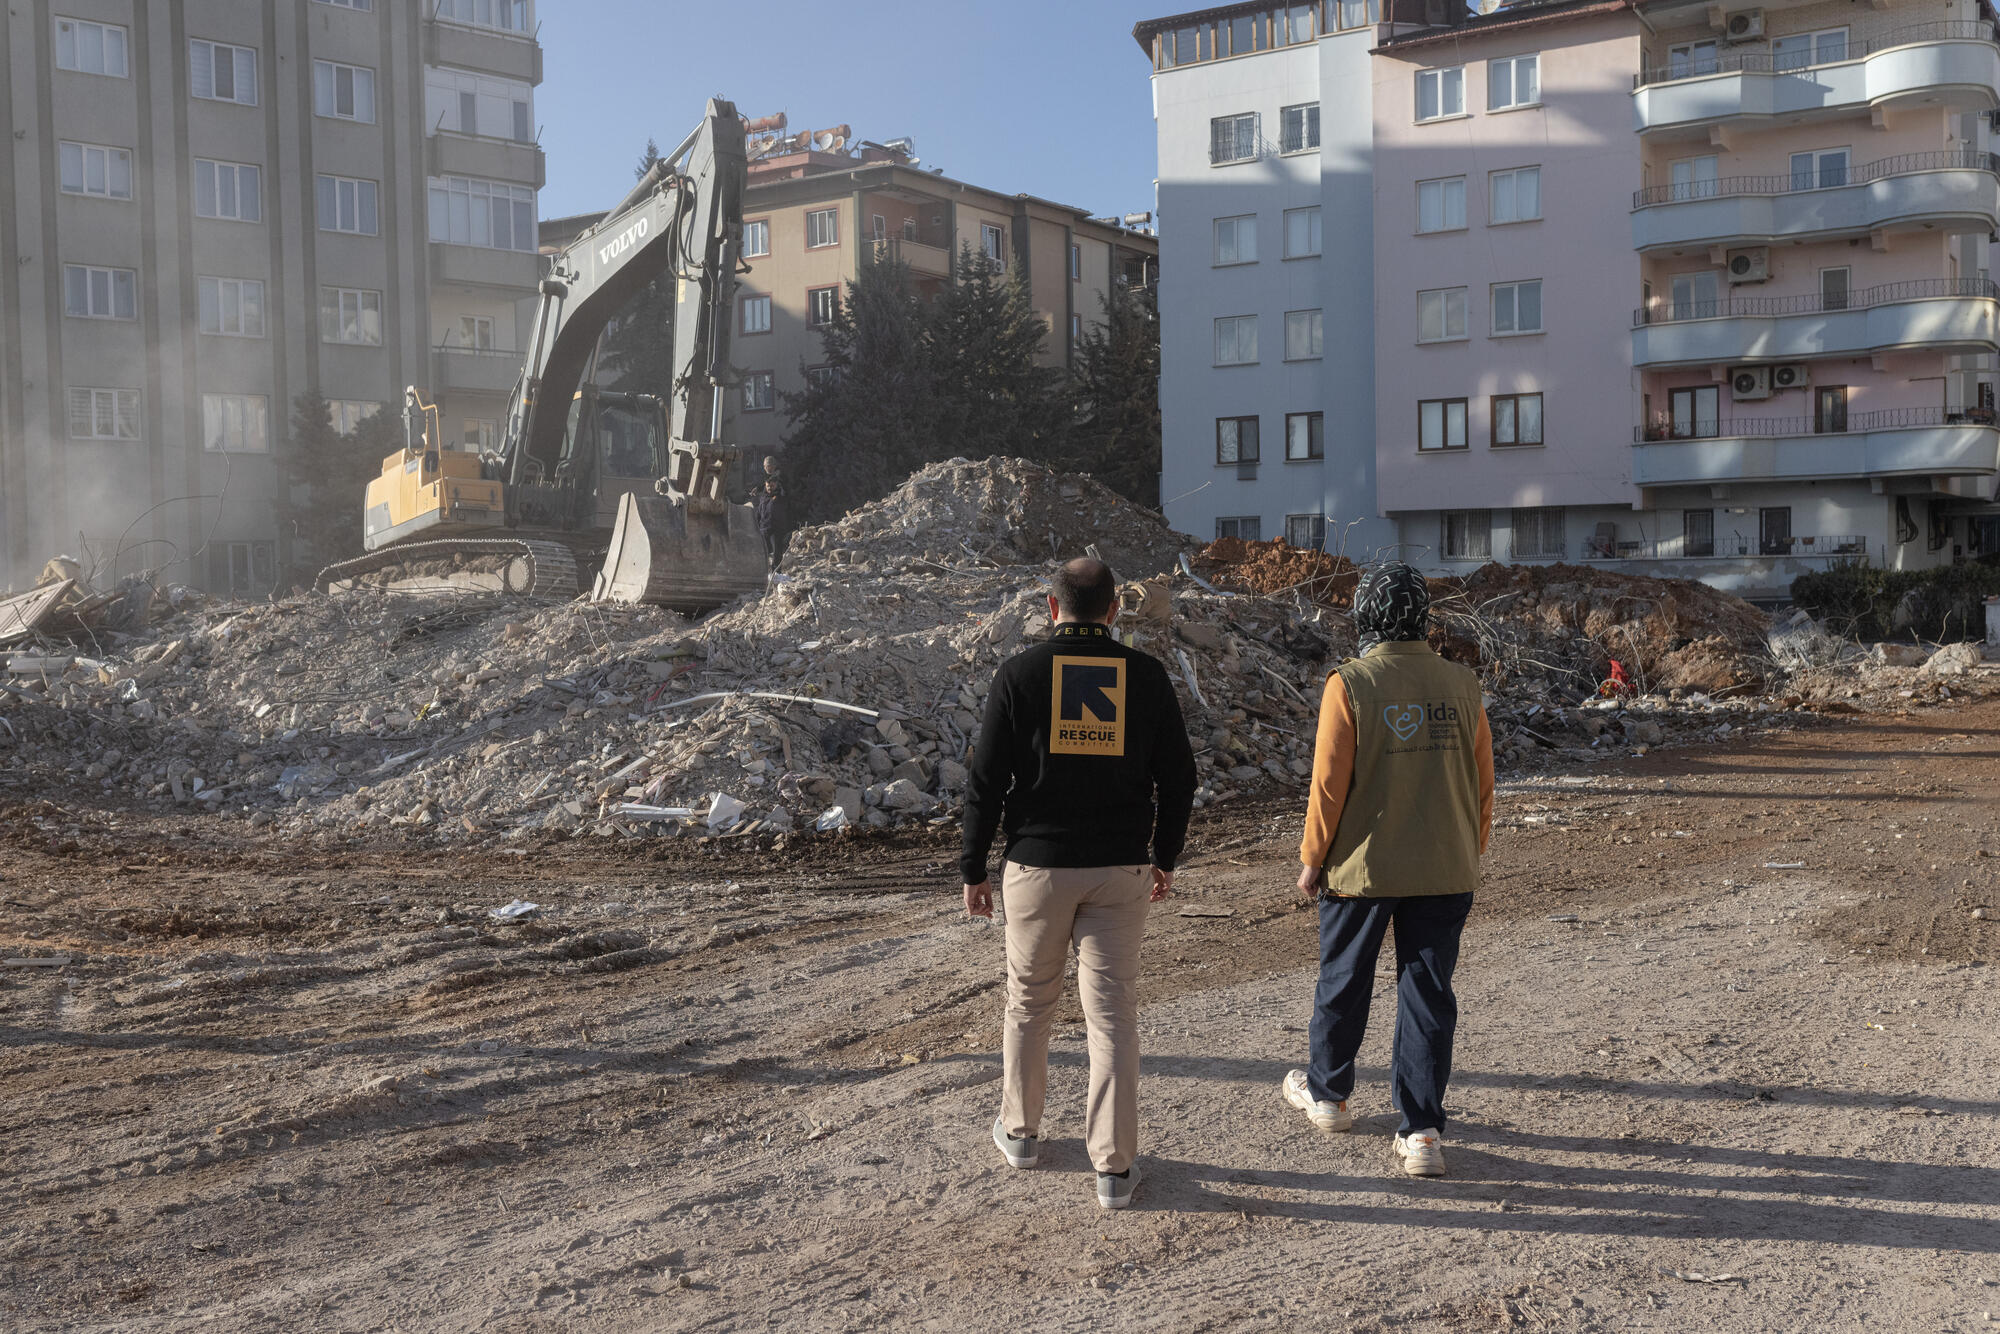 IRC staff amongst the rubble.